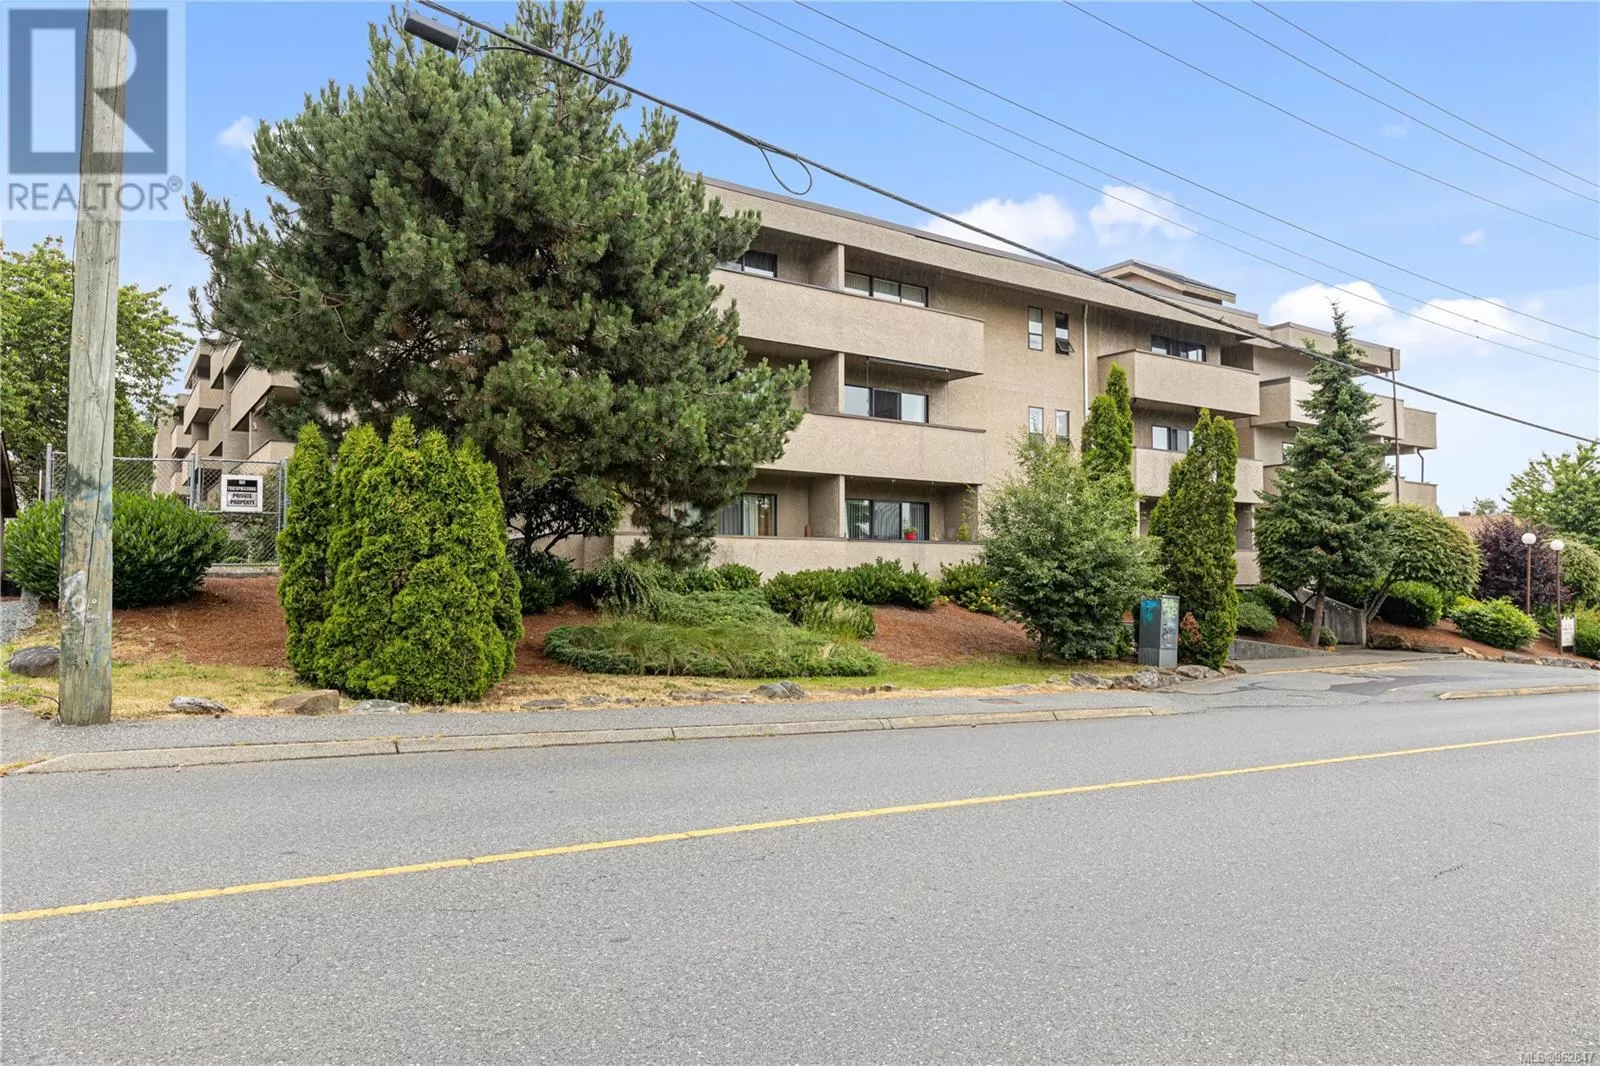 Apartment for rent: 102 550 Bradley St, Nanaimo, British Columbia V9S 5N4